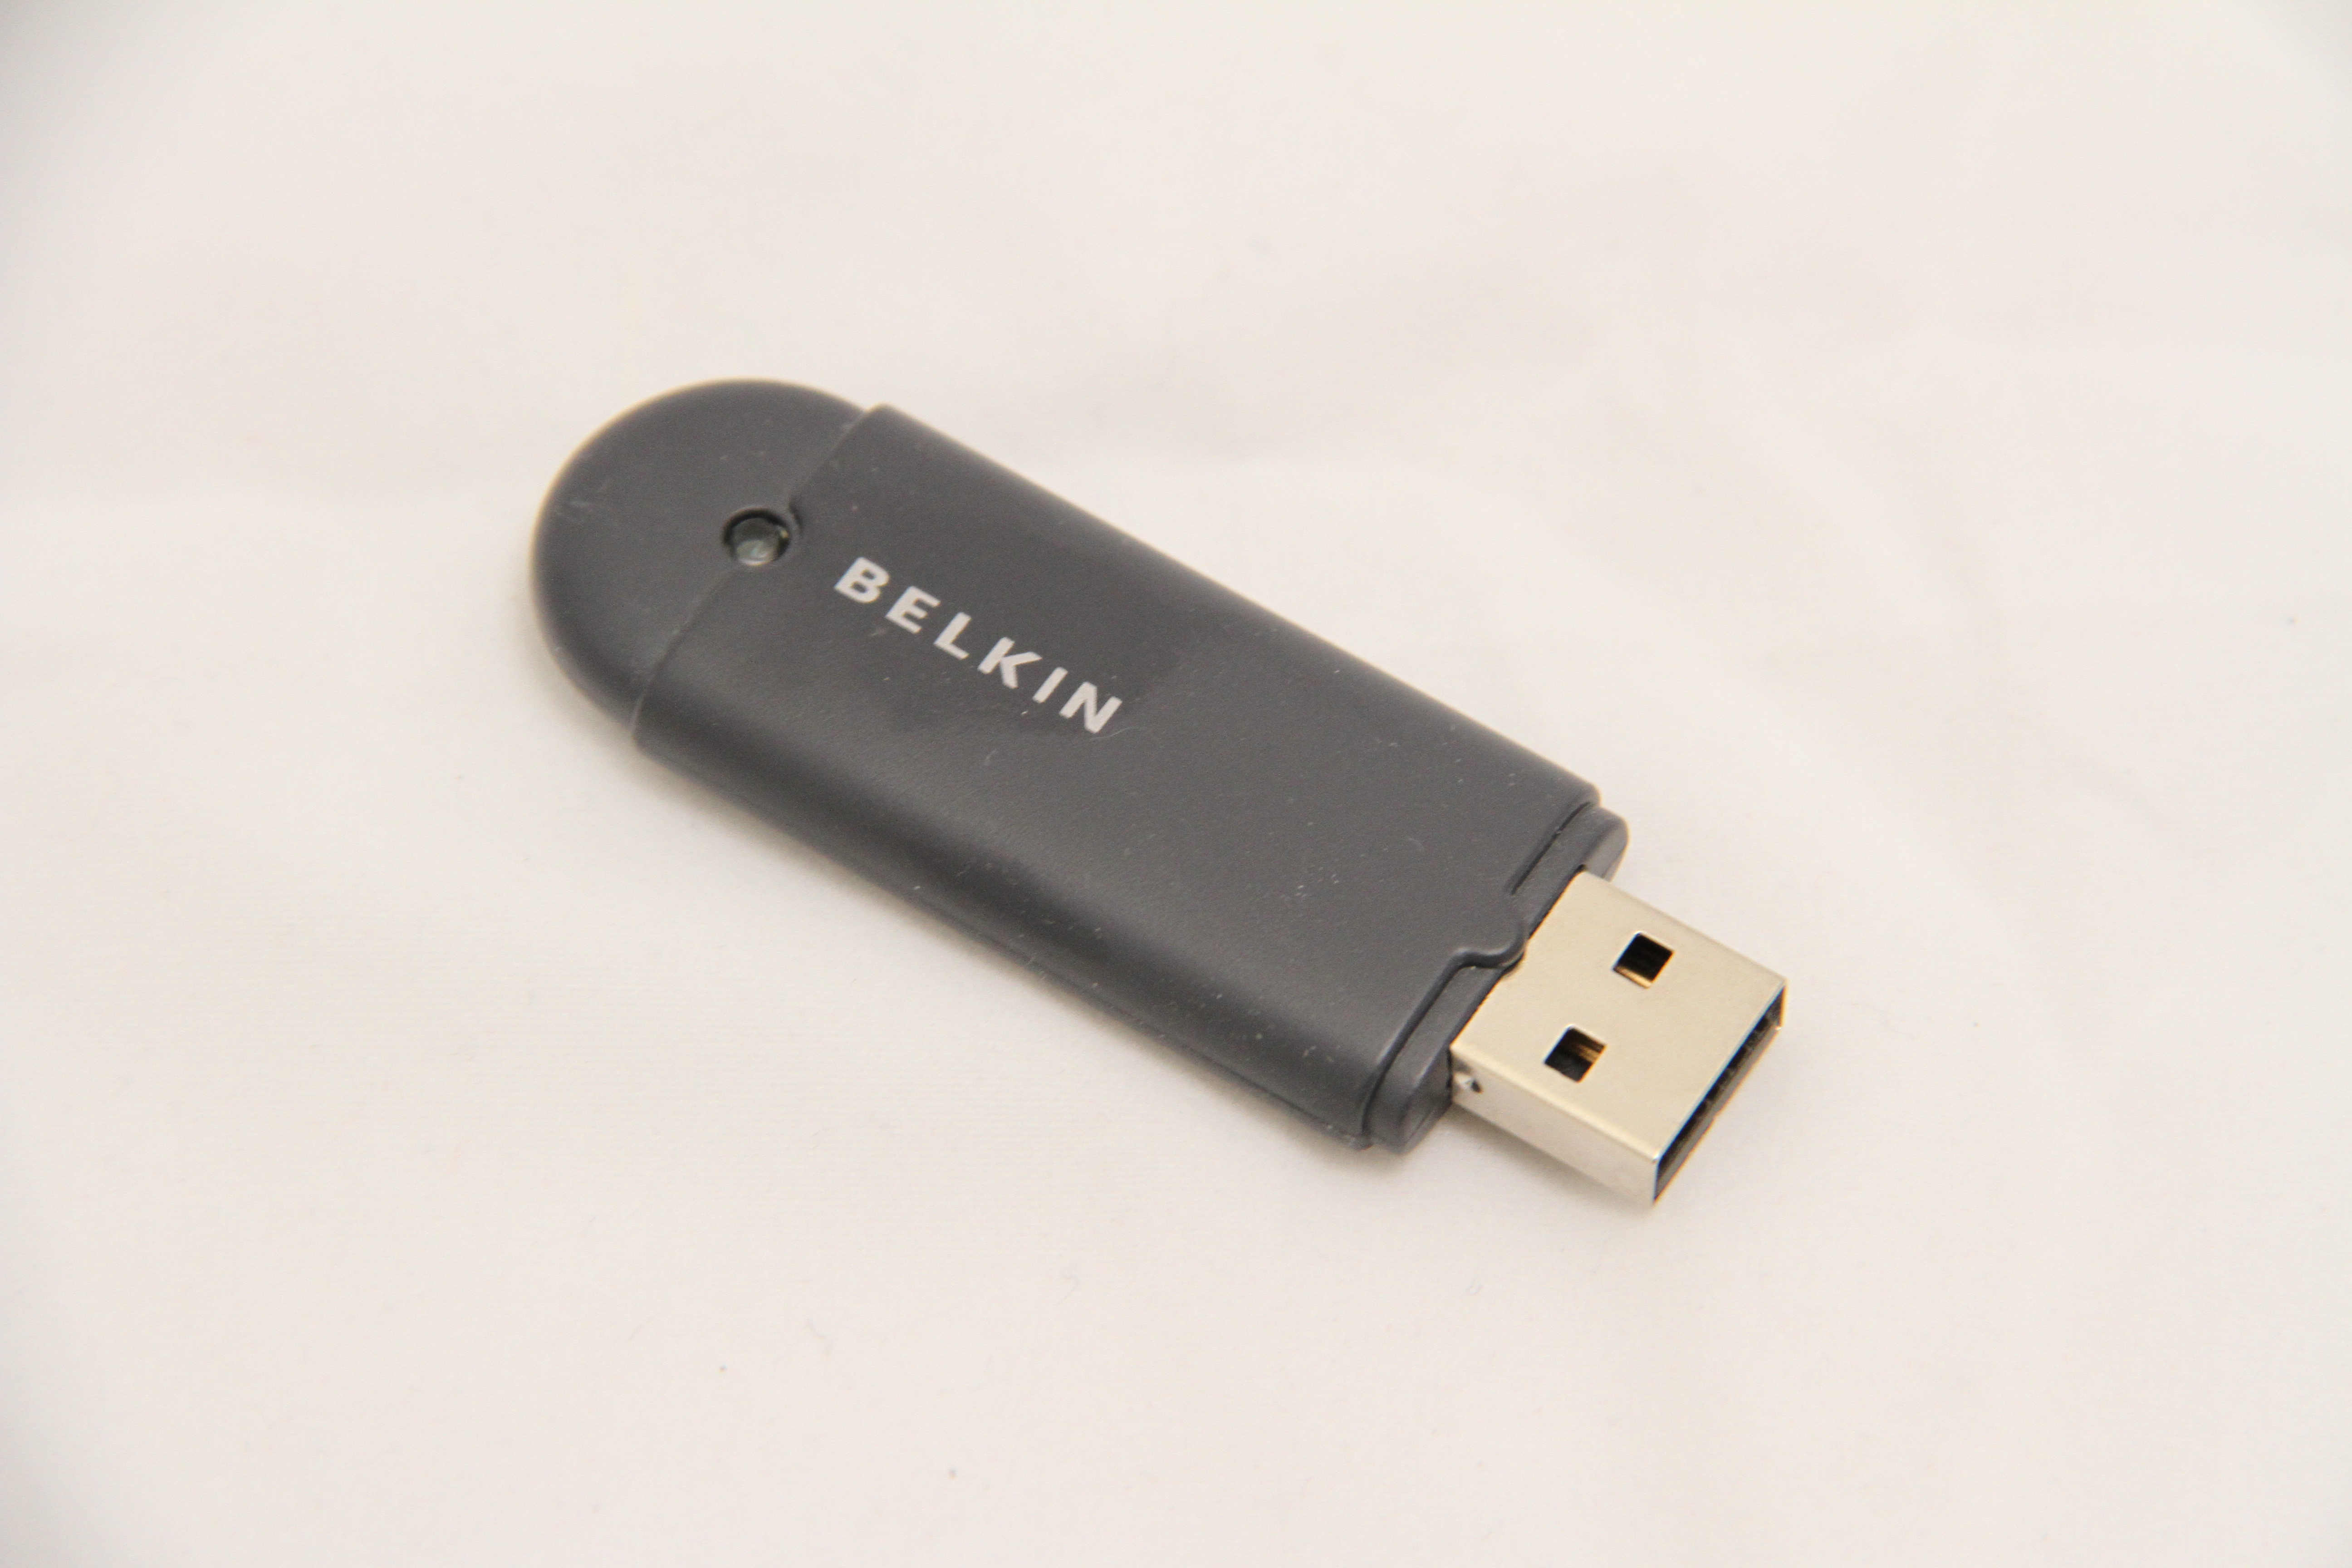 Bluetooth usb adapter драйвер. Bcm2045 USB Bluetooth адаптер. KS-ubt1 адаптер USB Bluetooth. Белкин блютуз адаптер. Адаптер Bluetooth-USB BT-590.